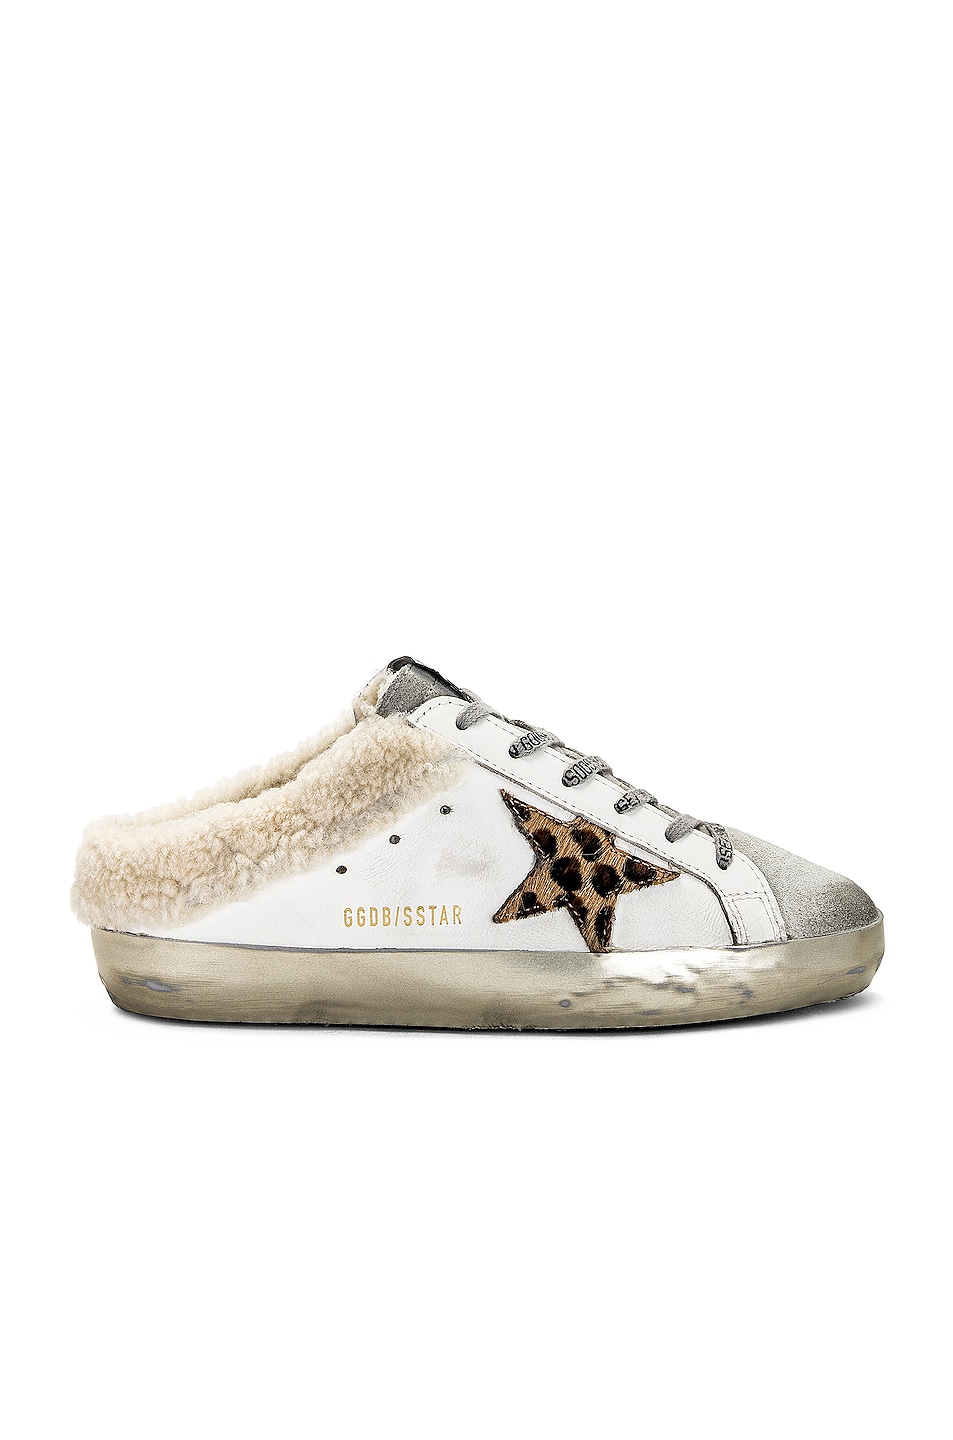 Image 1 of Golden Goose Superstar Sabot Sneaker in White Ice, Beige Brown Leopard, & Beige